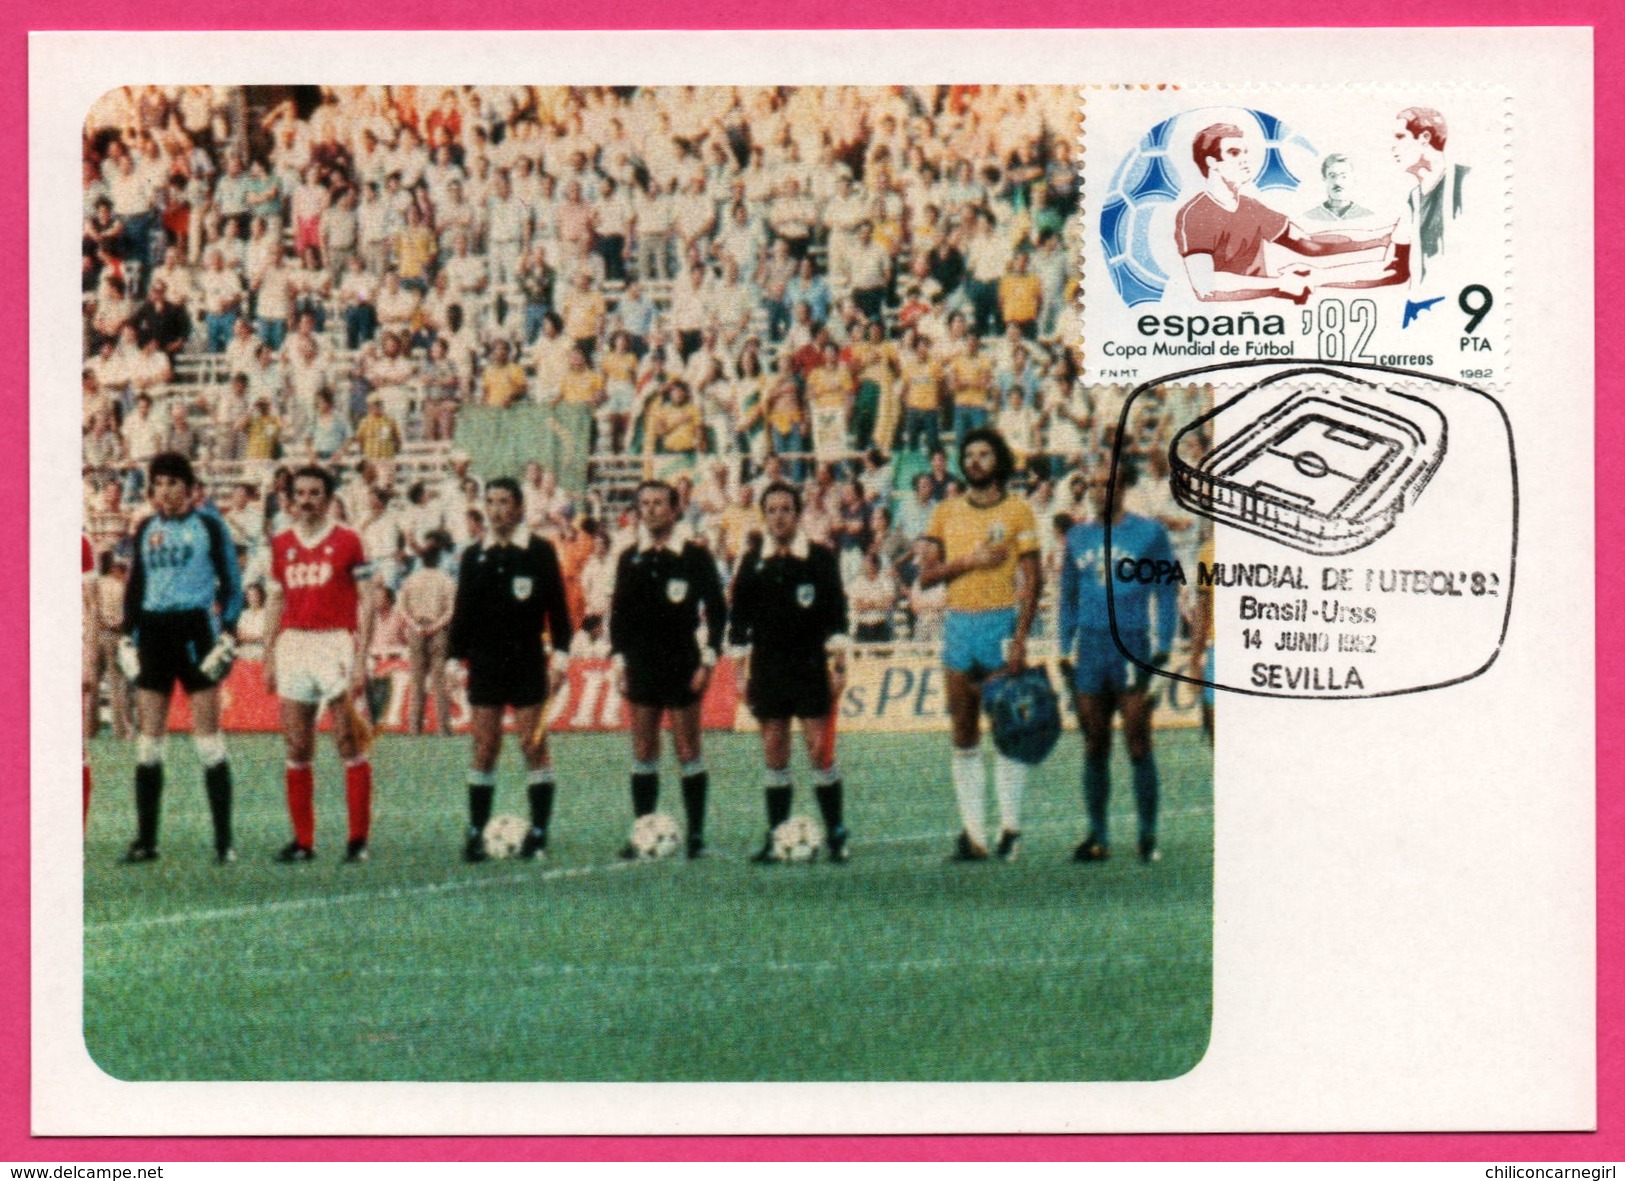 1982 Spain - Carte Maximum - Football - Copa de Futbol Espana 82 - Sevilla 1982 - Brasil URSS